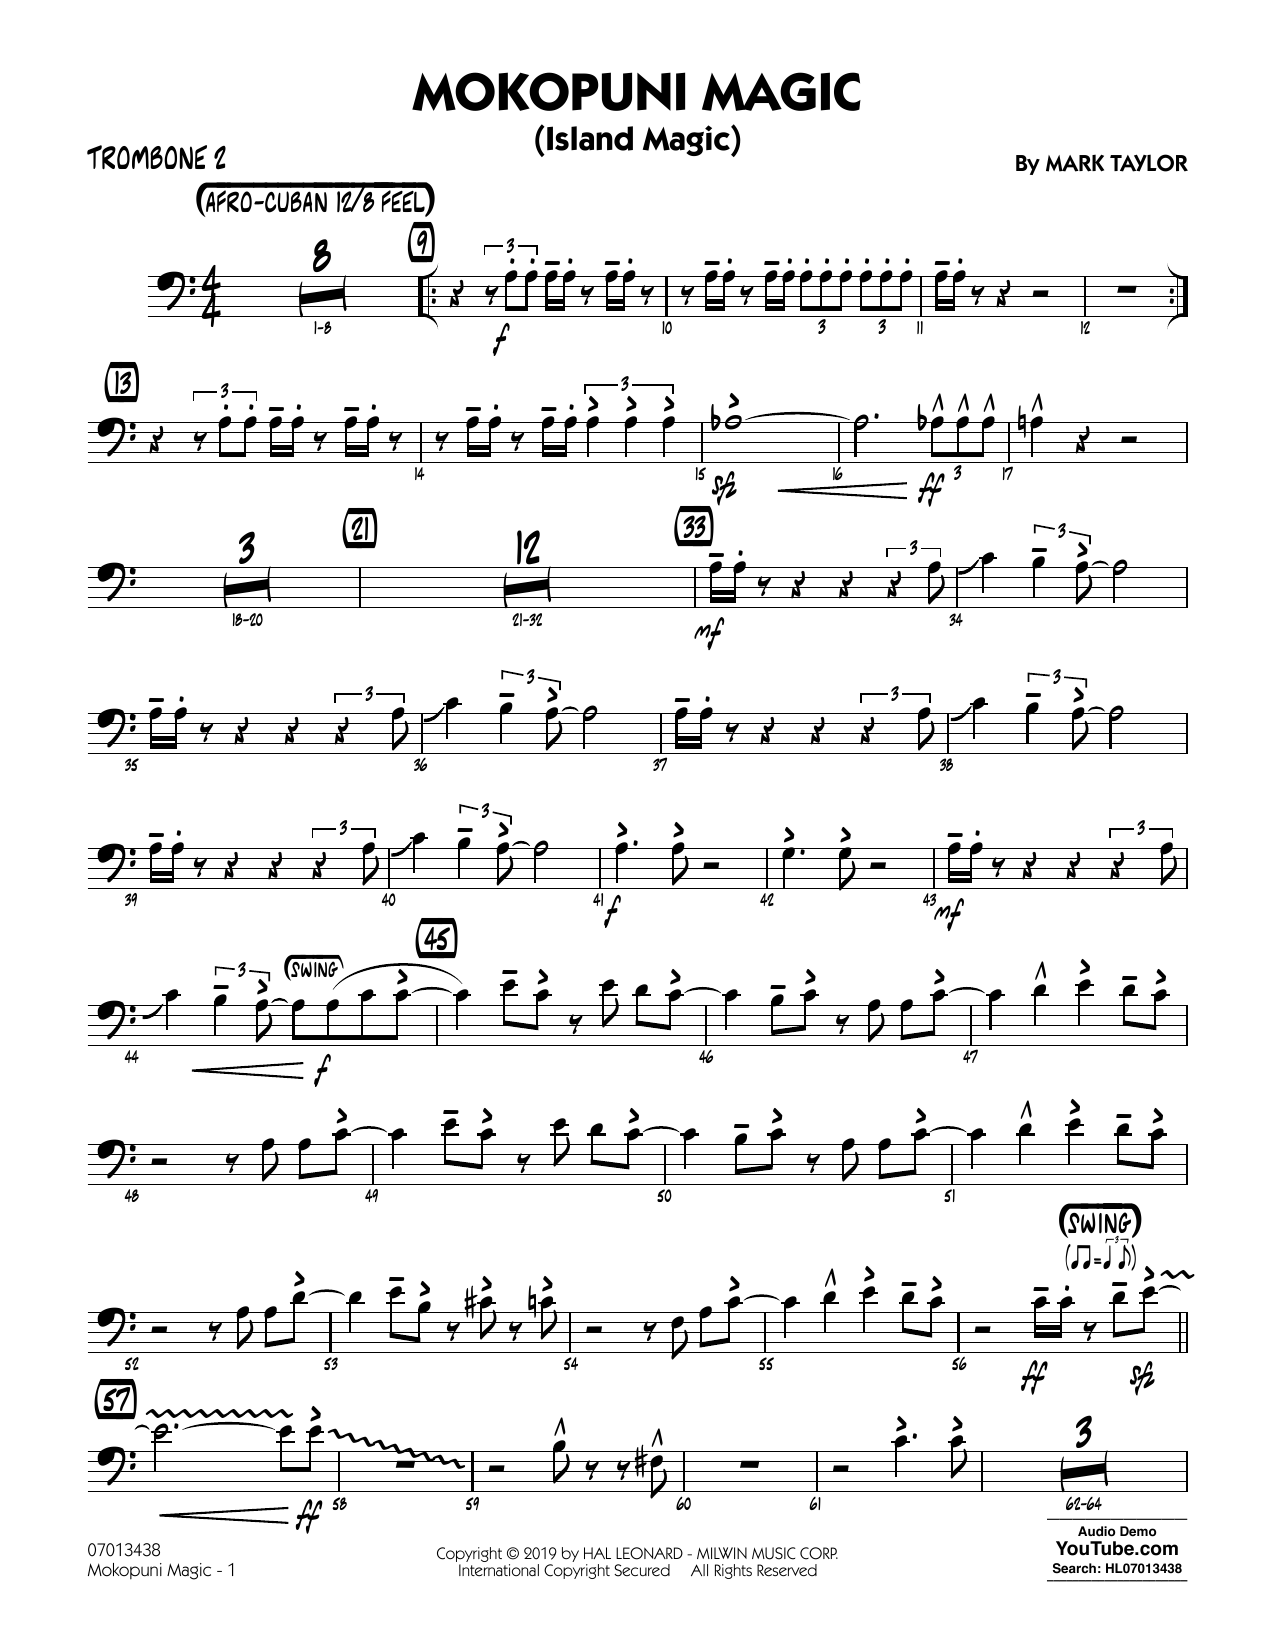 Mark Taylor Mokopuni Magic (Island Magic) - Trombone 2 Sheet Music Notes & Chords for Jazz Ensemble - Download or Print PDF